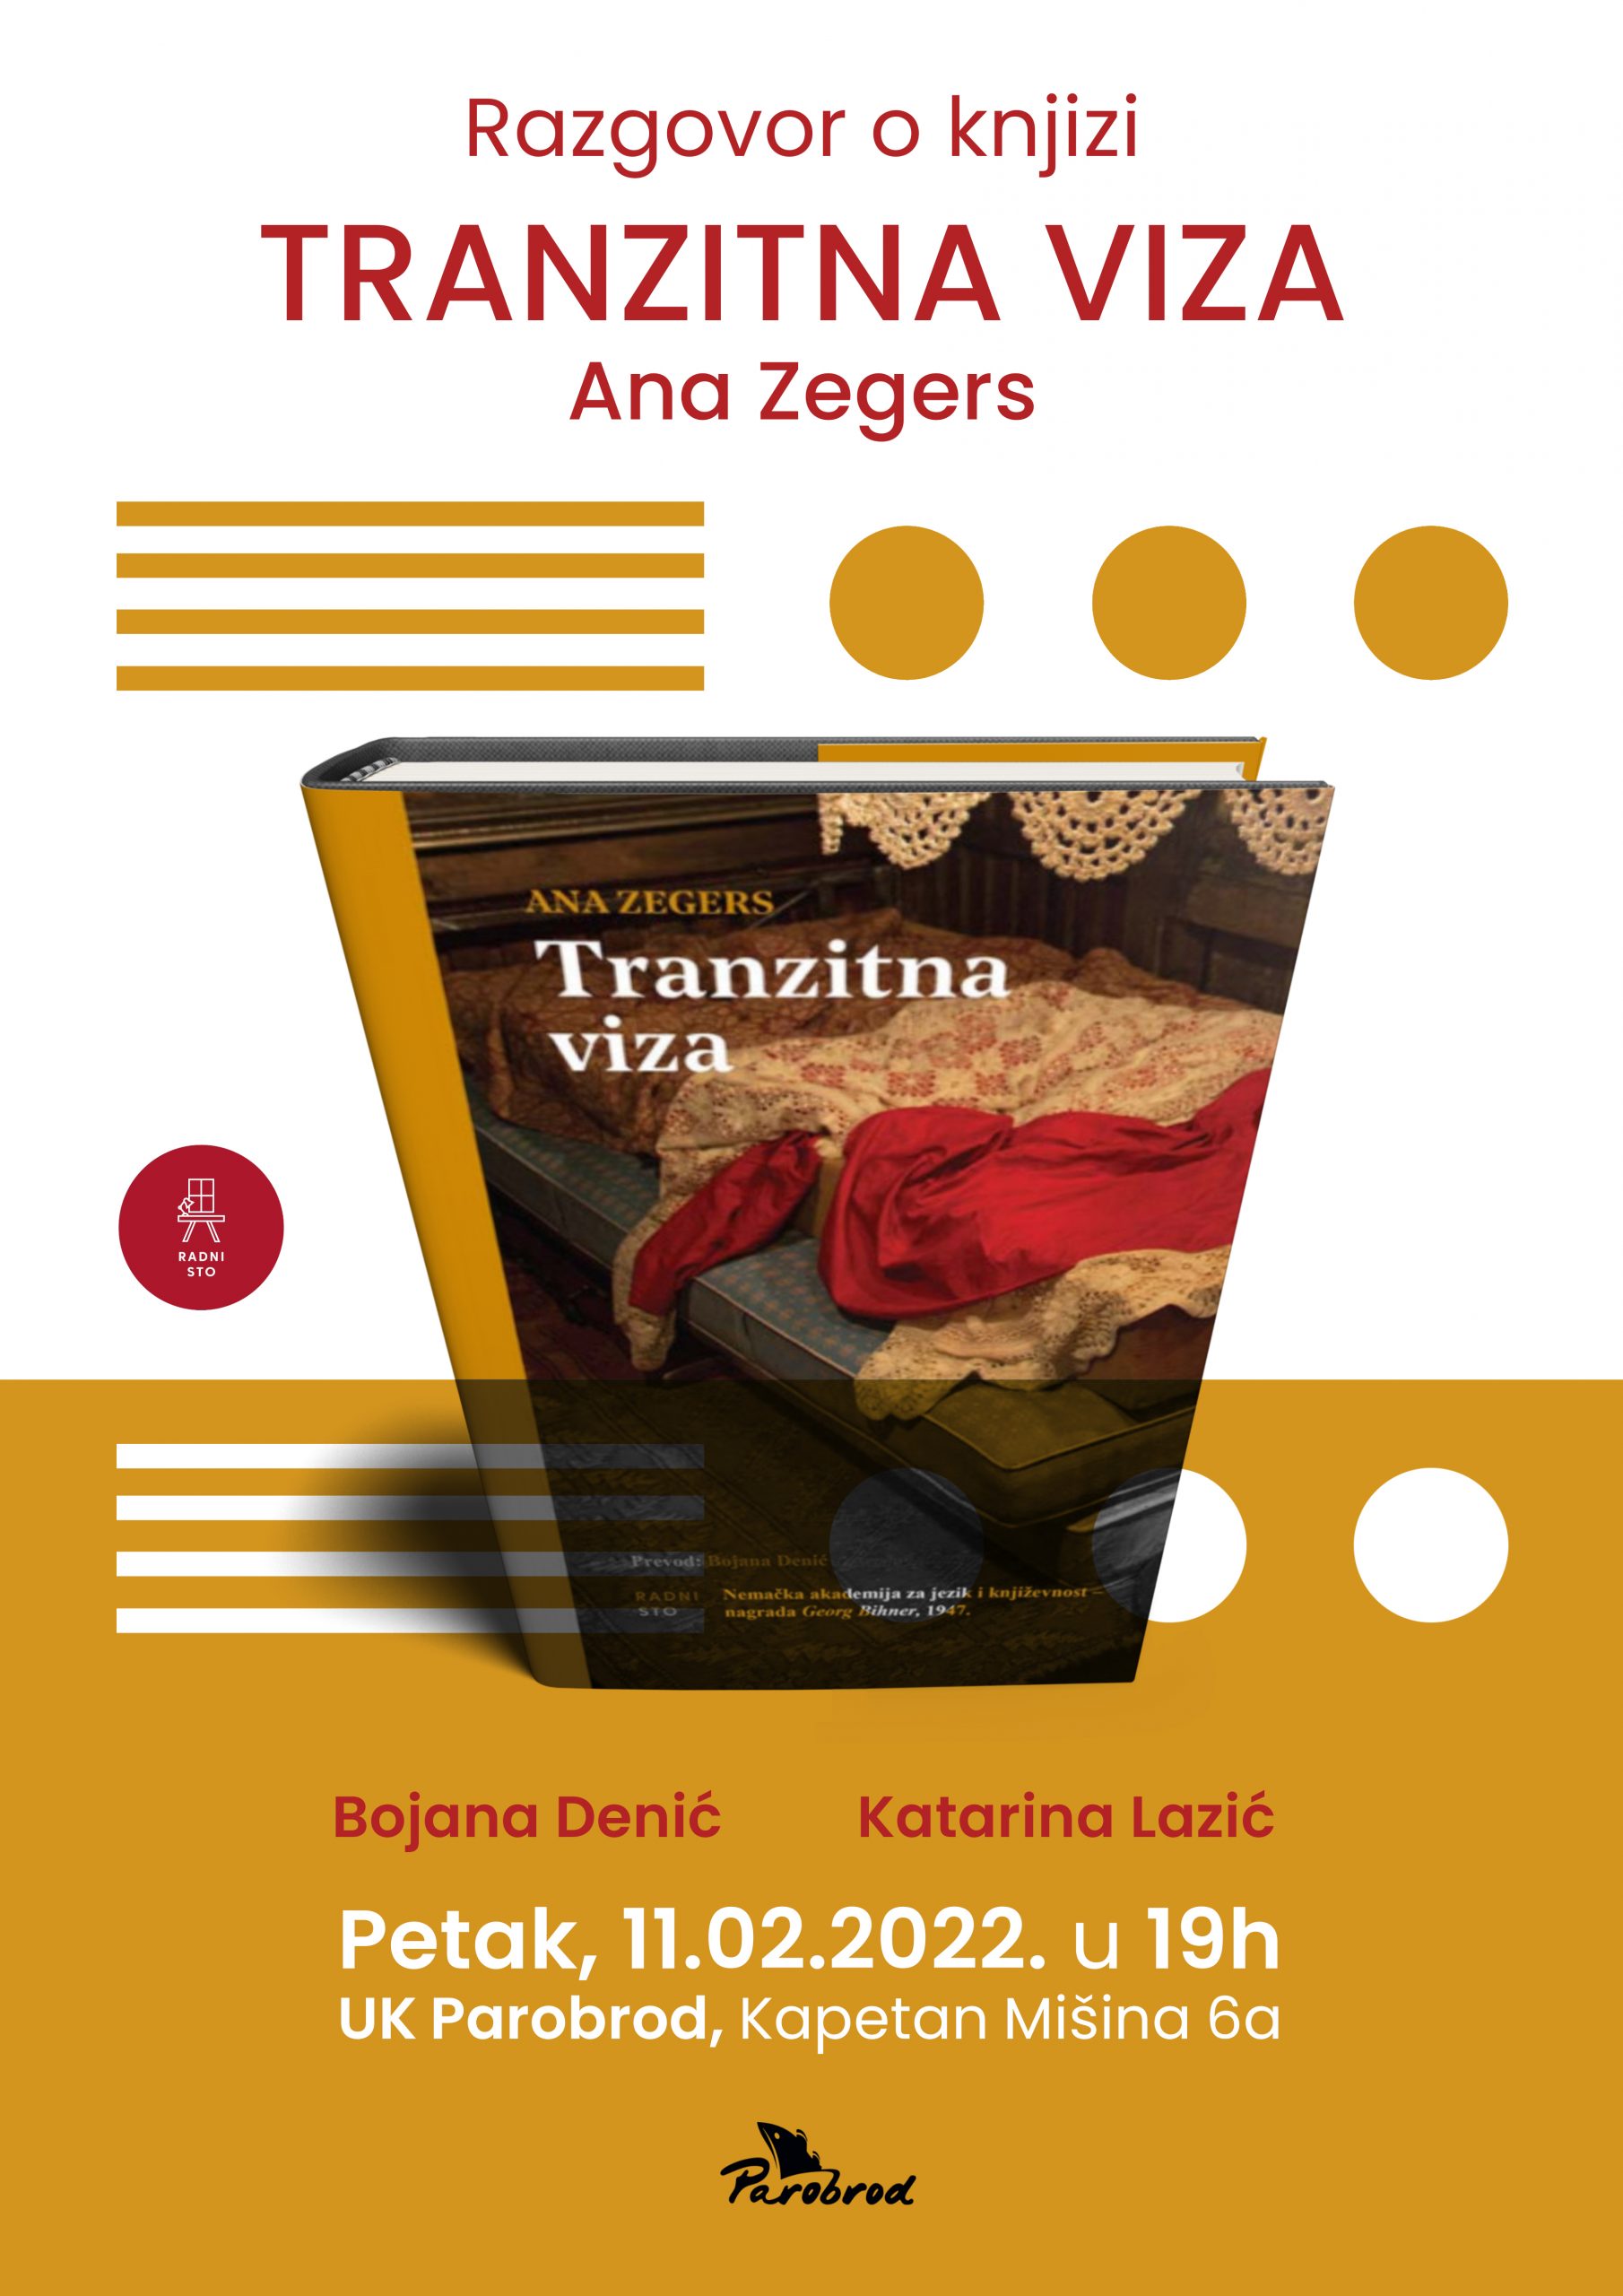 Razgovor o knjizi “Tranzitna viza” Ana Zegers